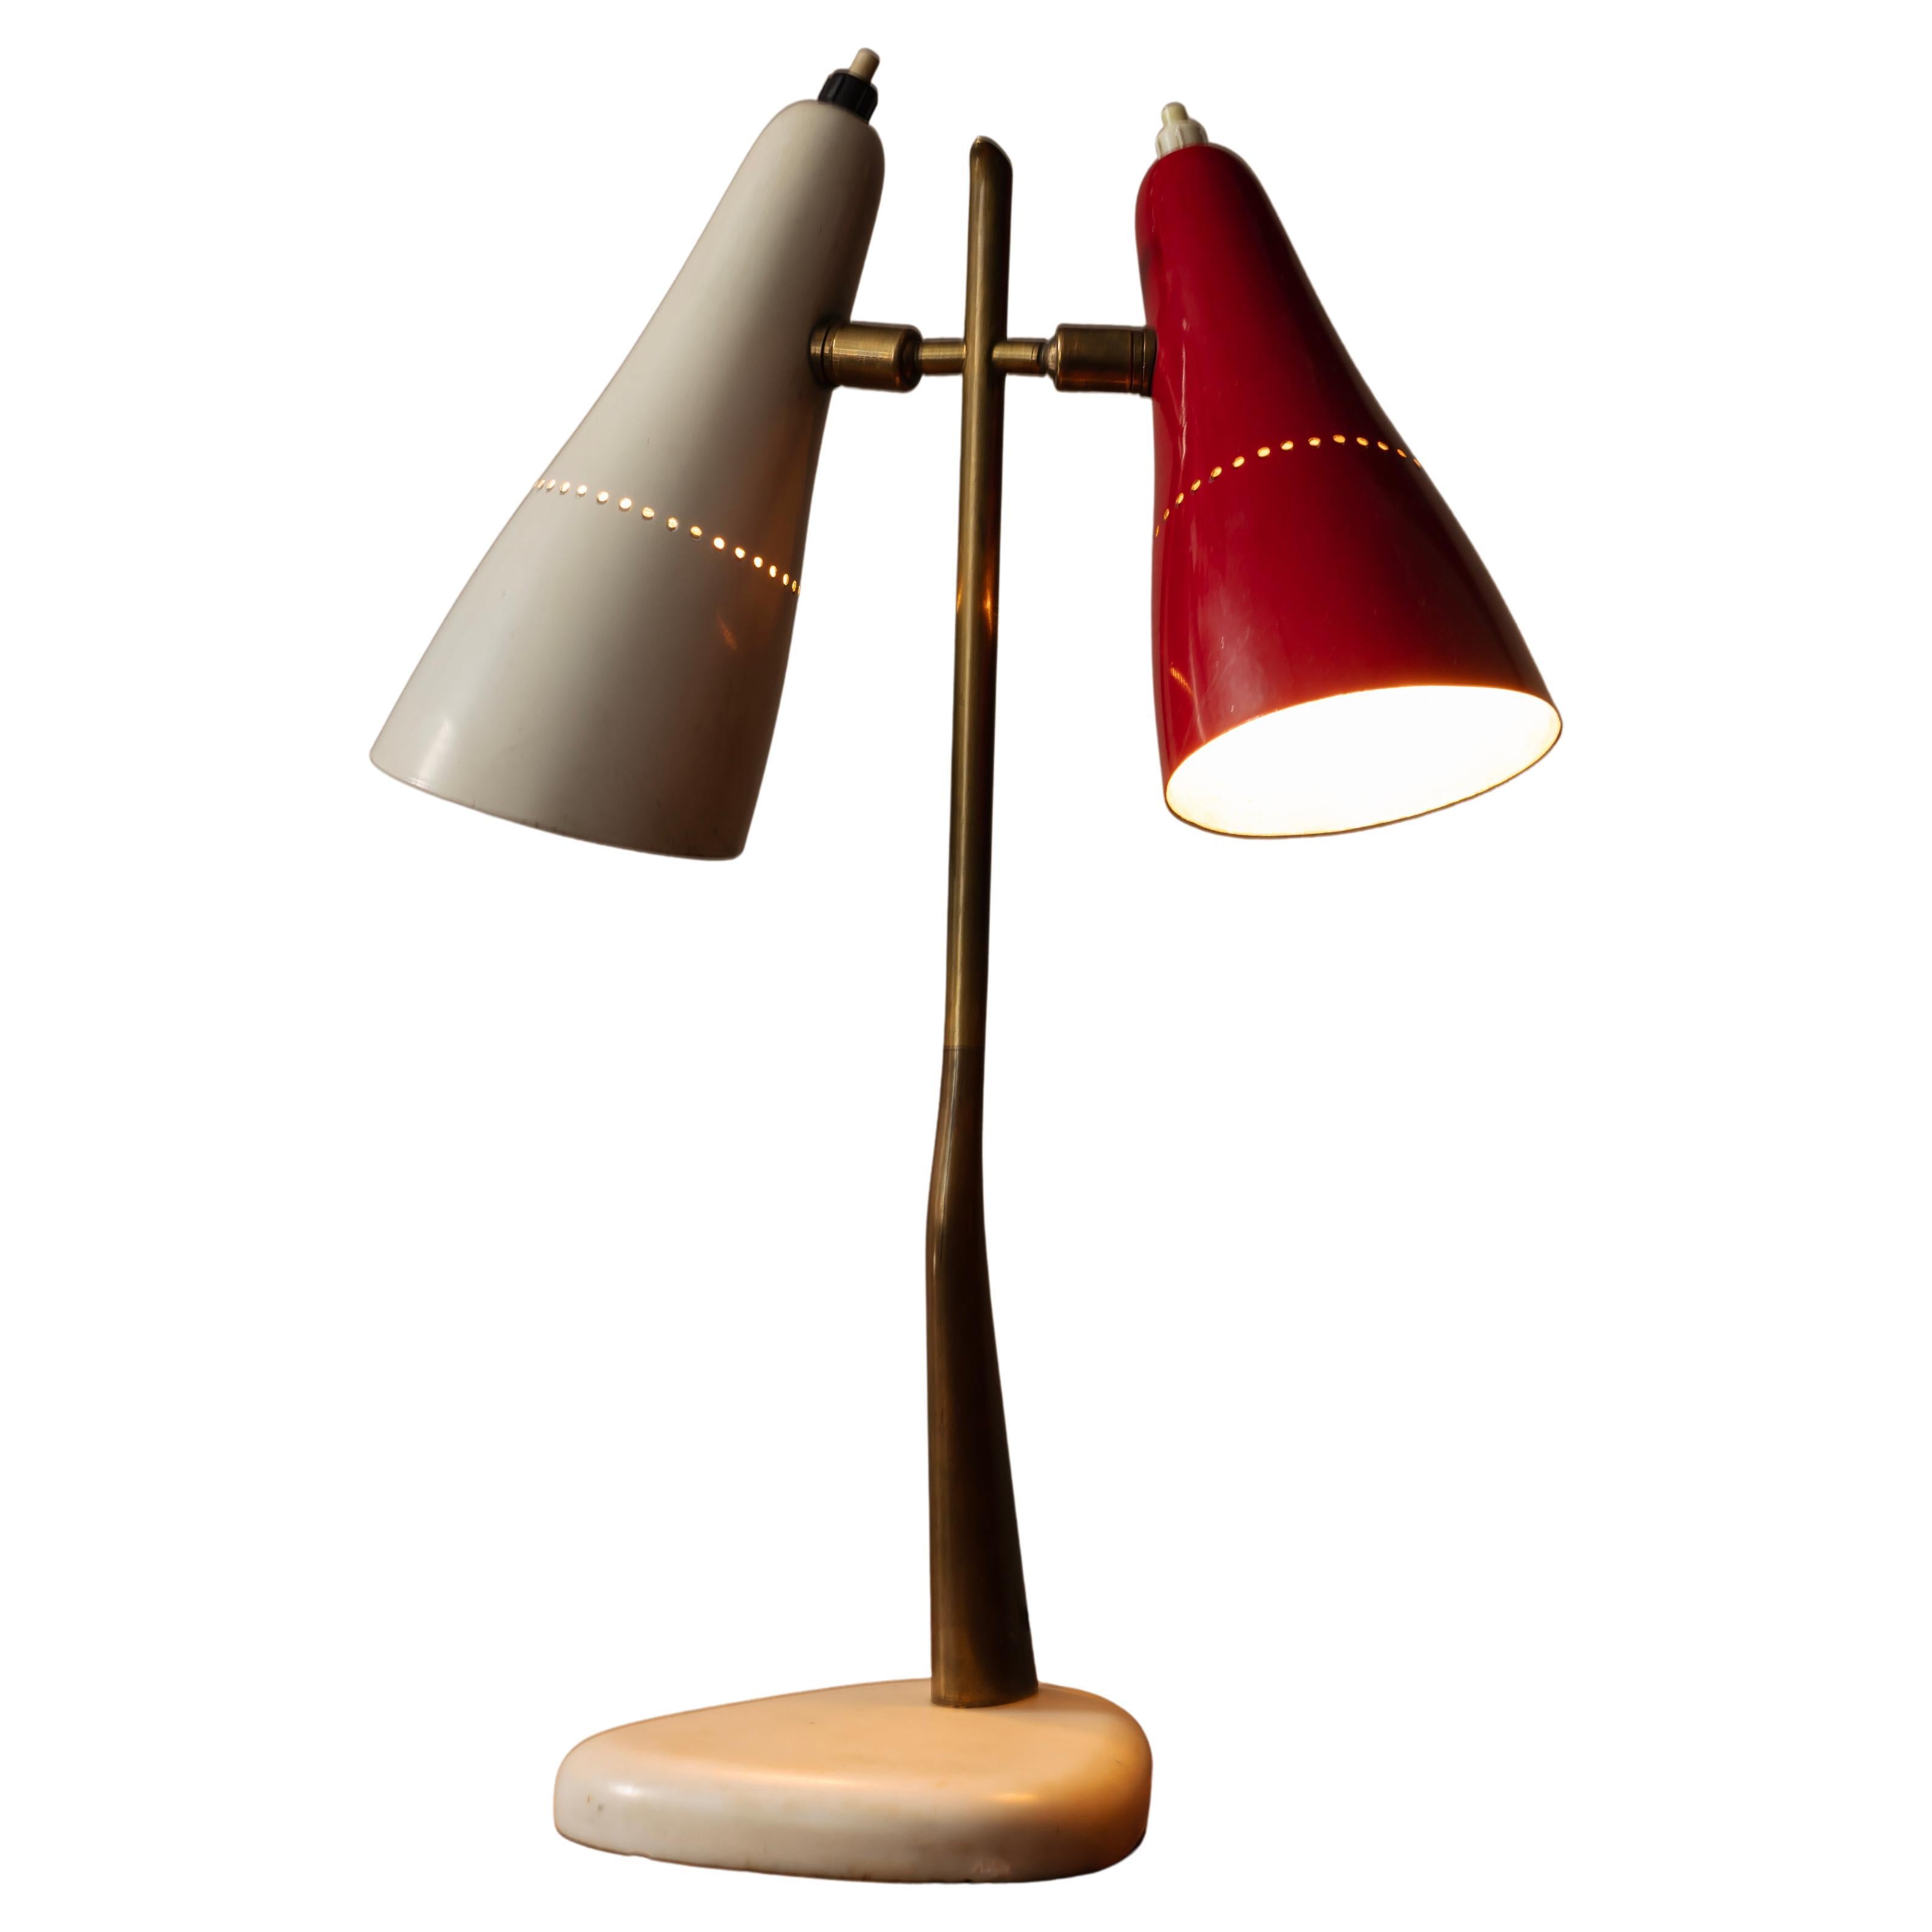 Oscar Torlasco double headed desk lamp in red and cream enamel. Italian, c1950s